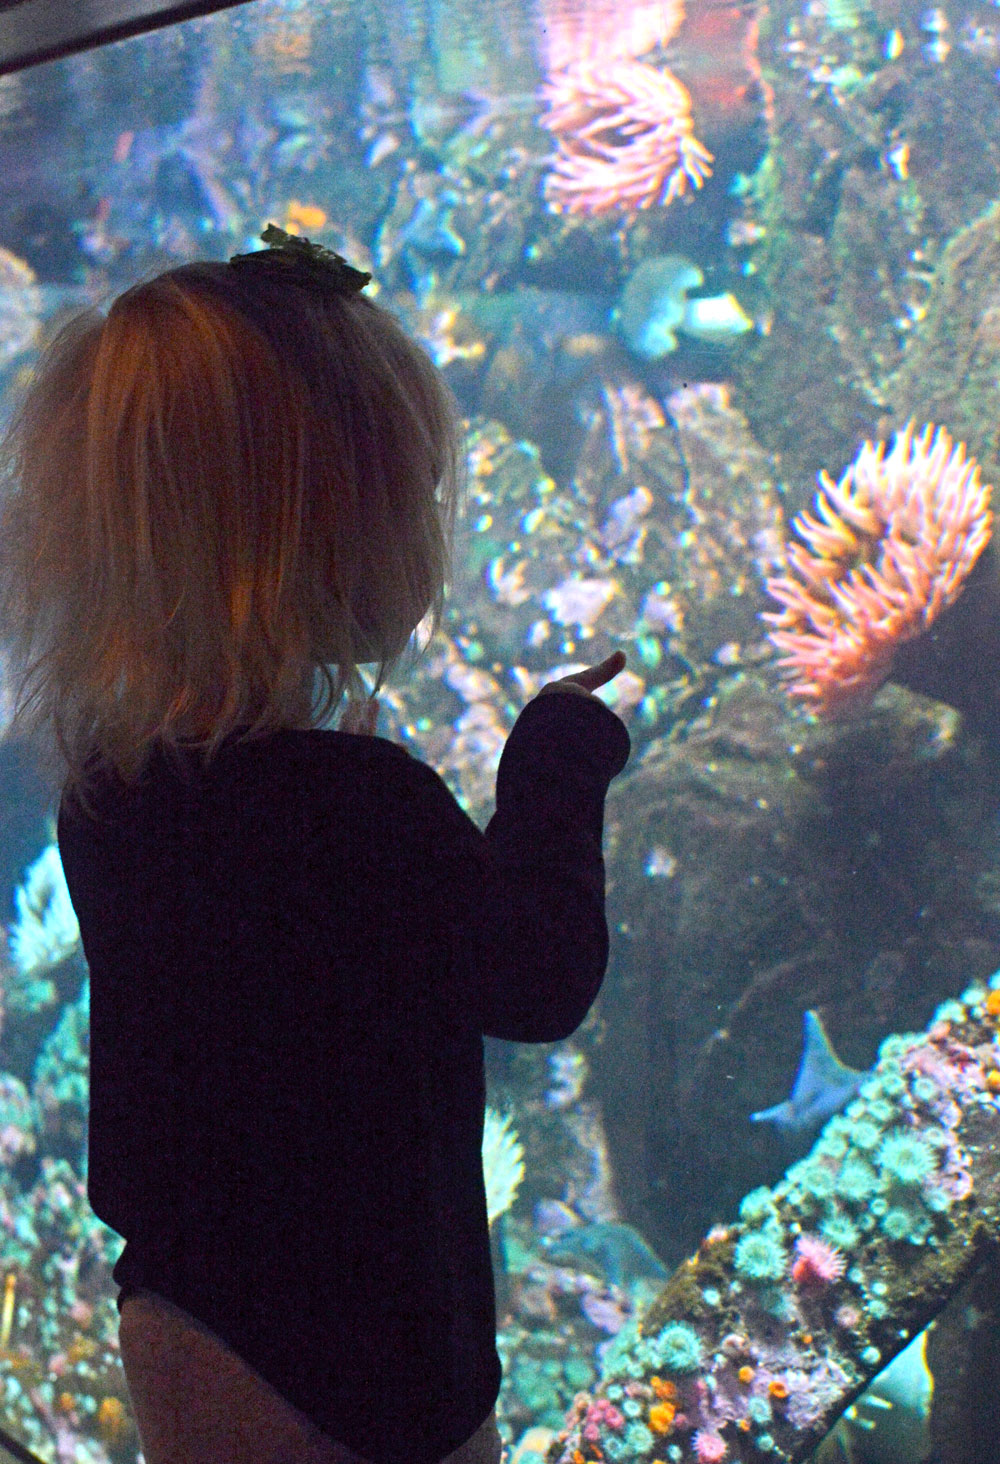 Vancouver Aquarium star fish and sea anemones - Mommy Scene